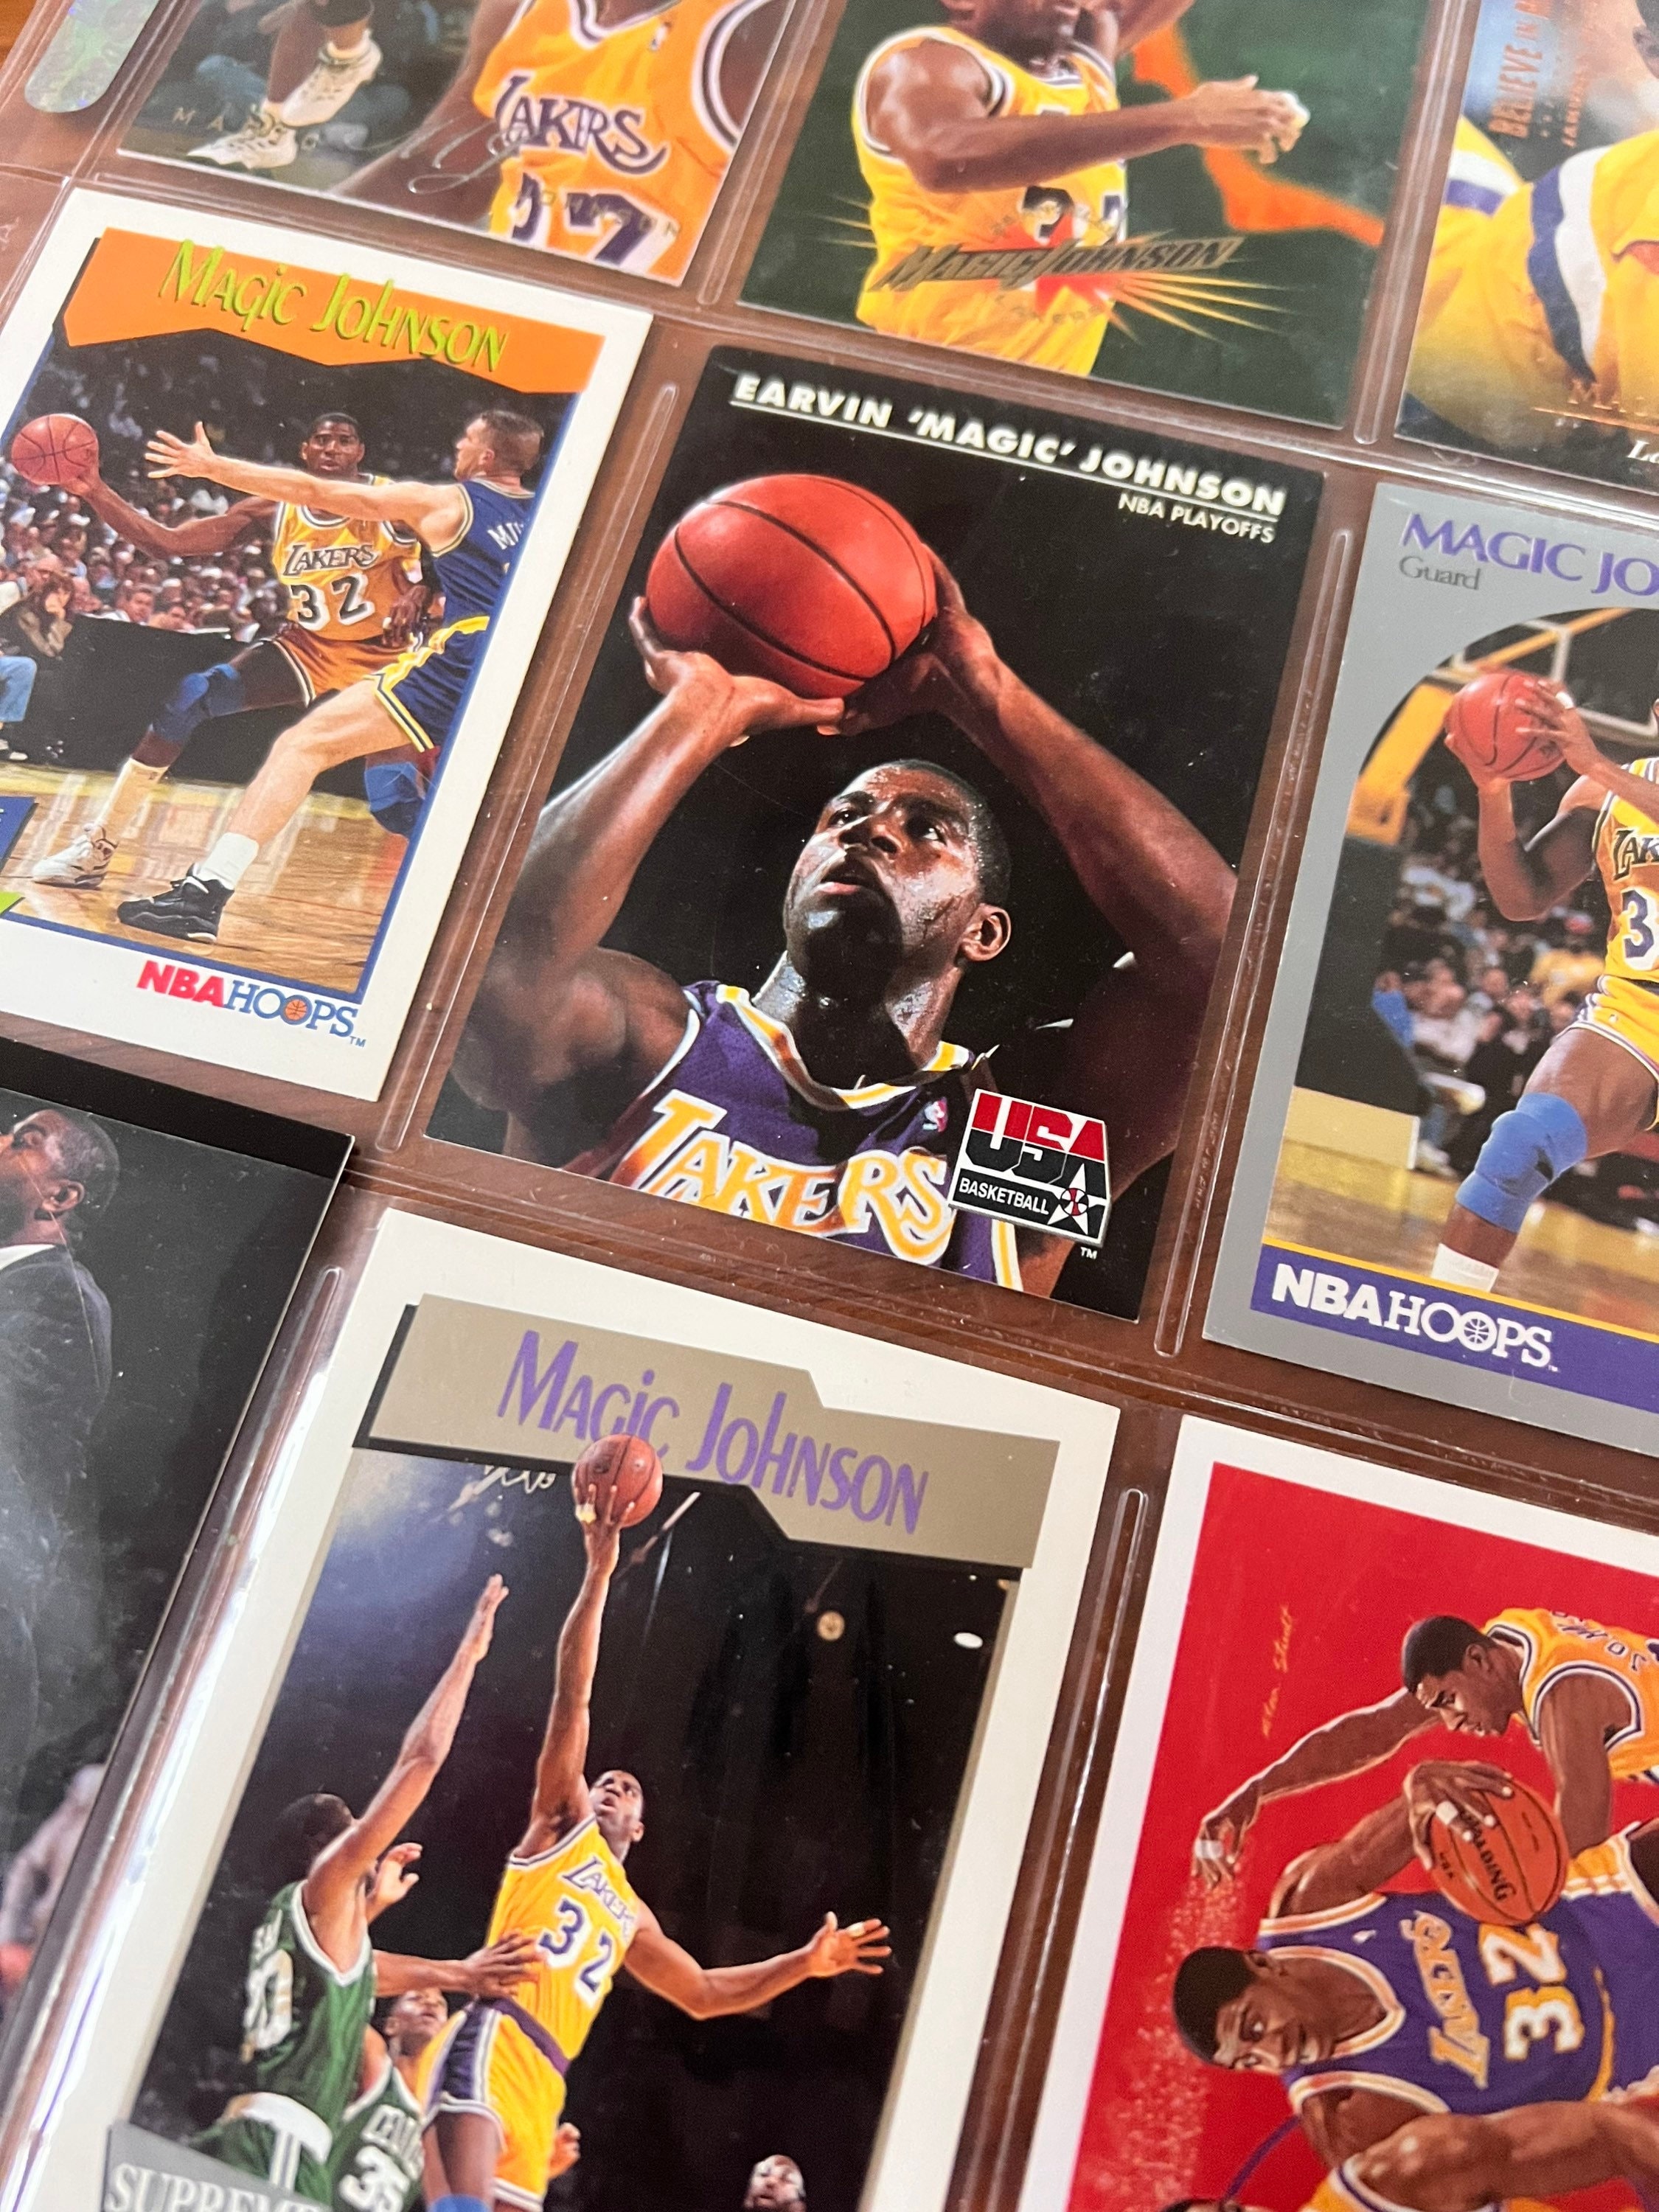 1991 Wild Card #15 Patrick Ewing Value - Basketball